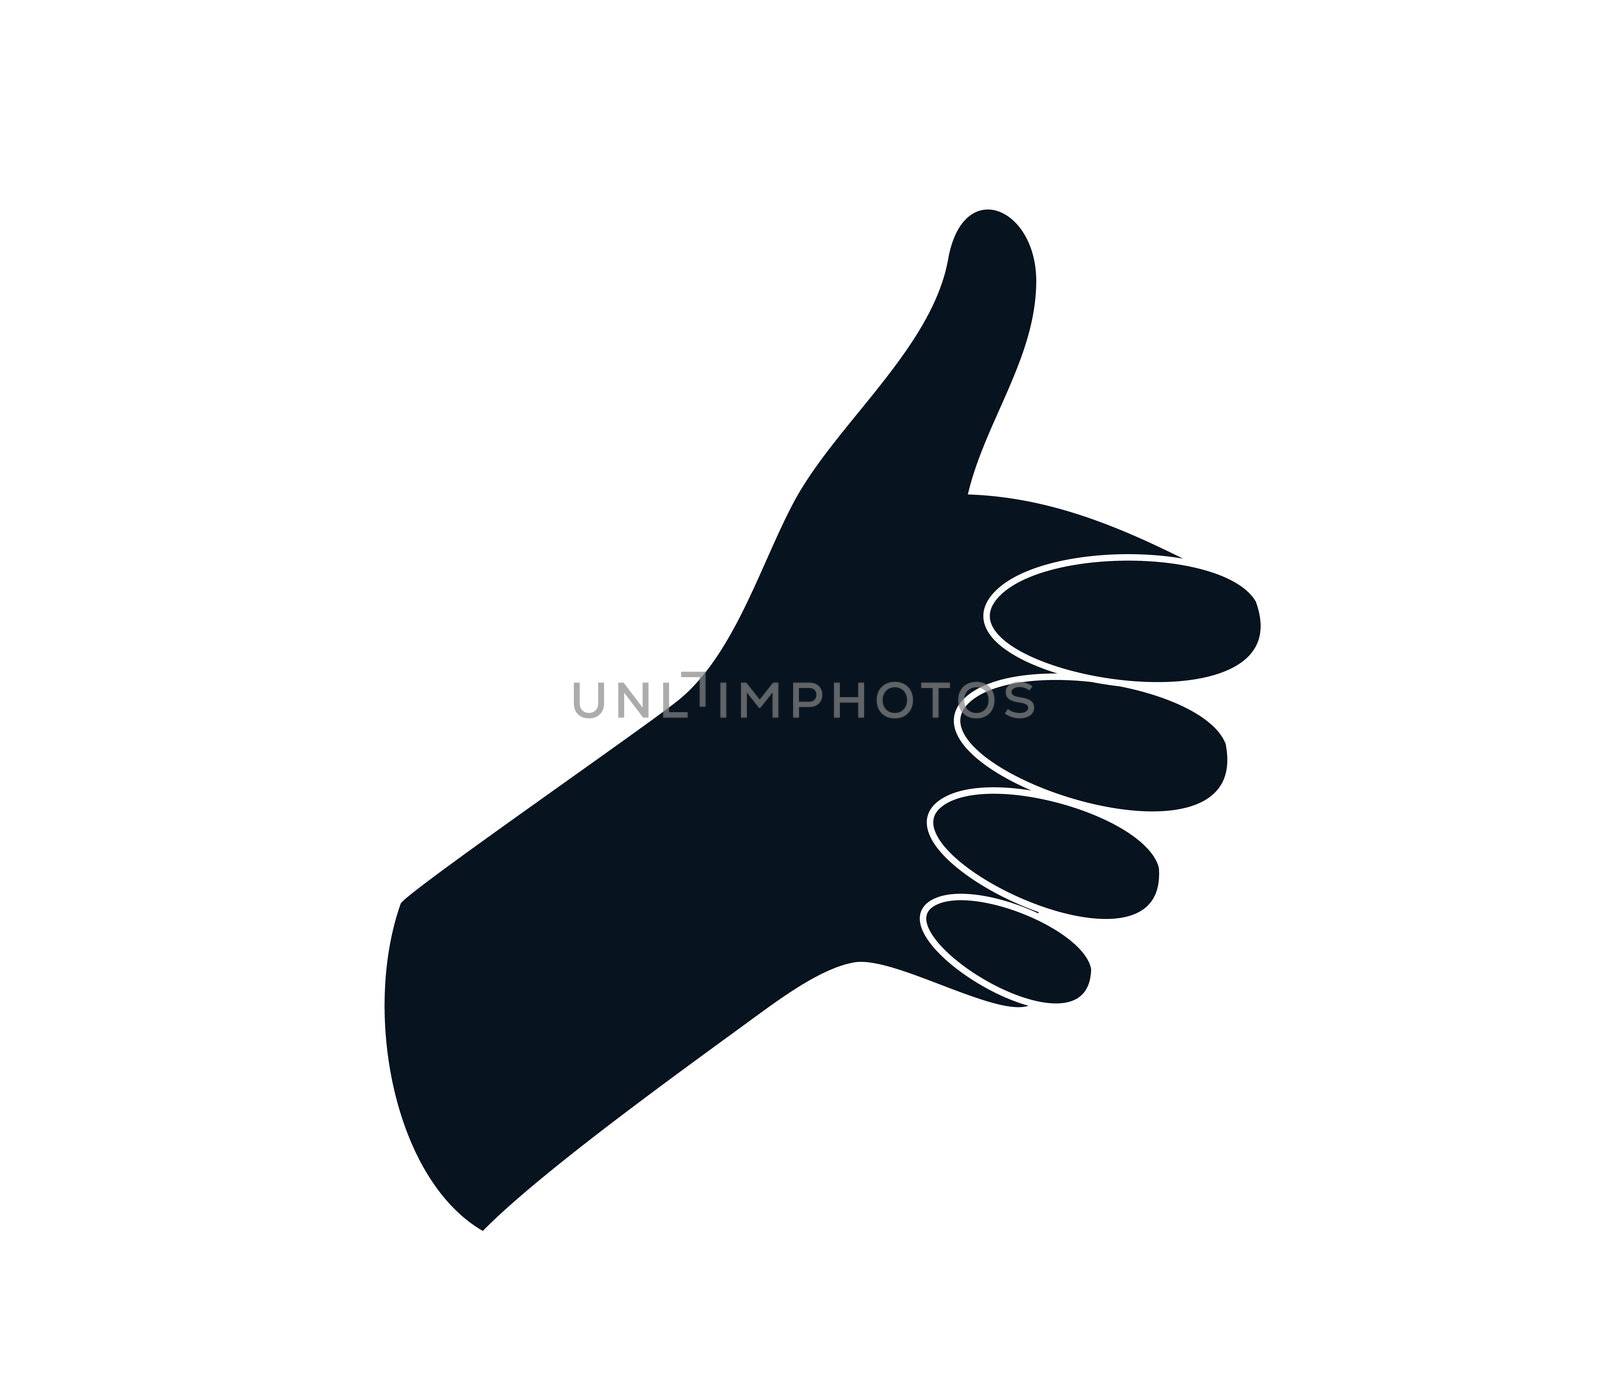 Thumbs up by leeser